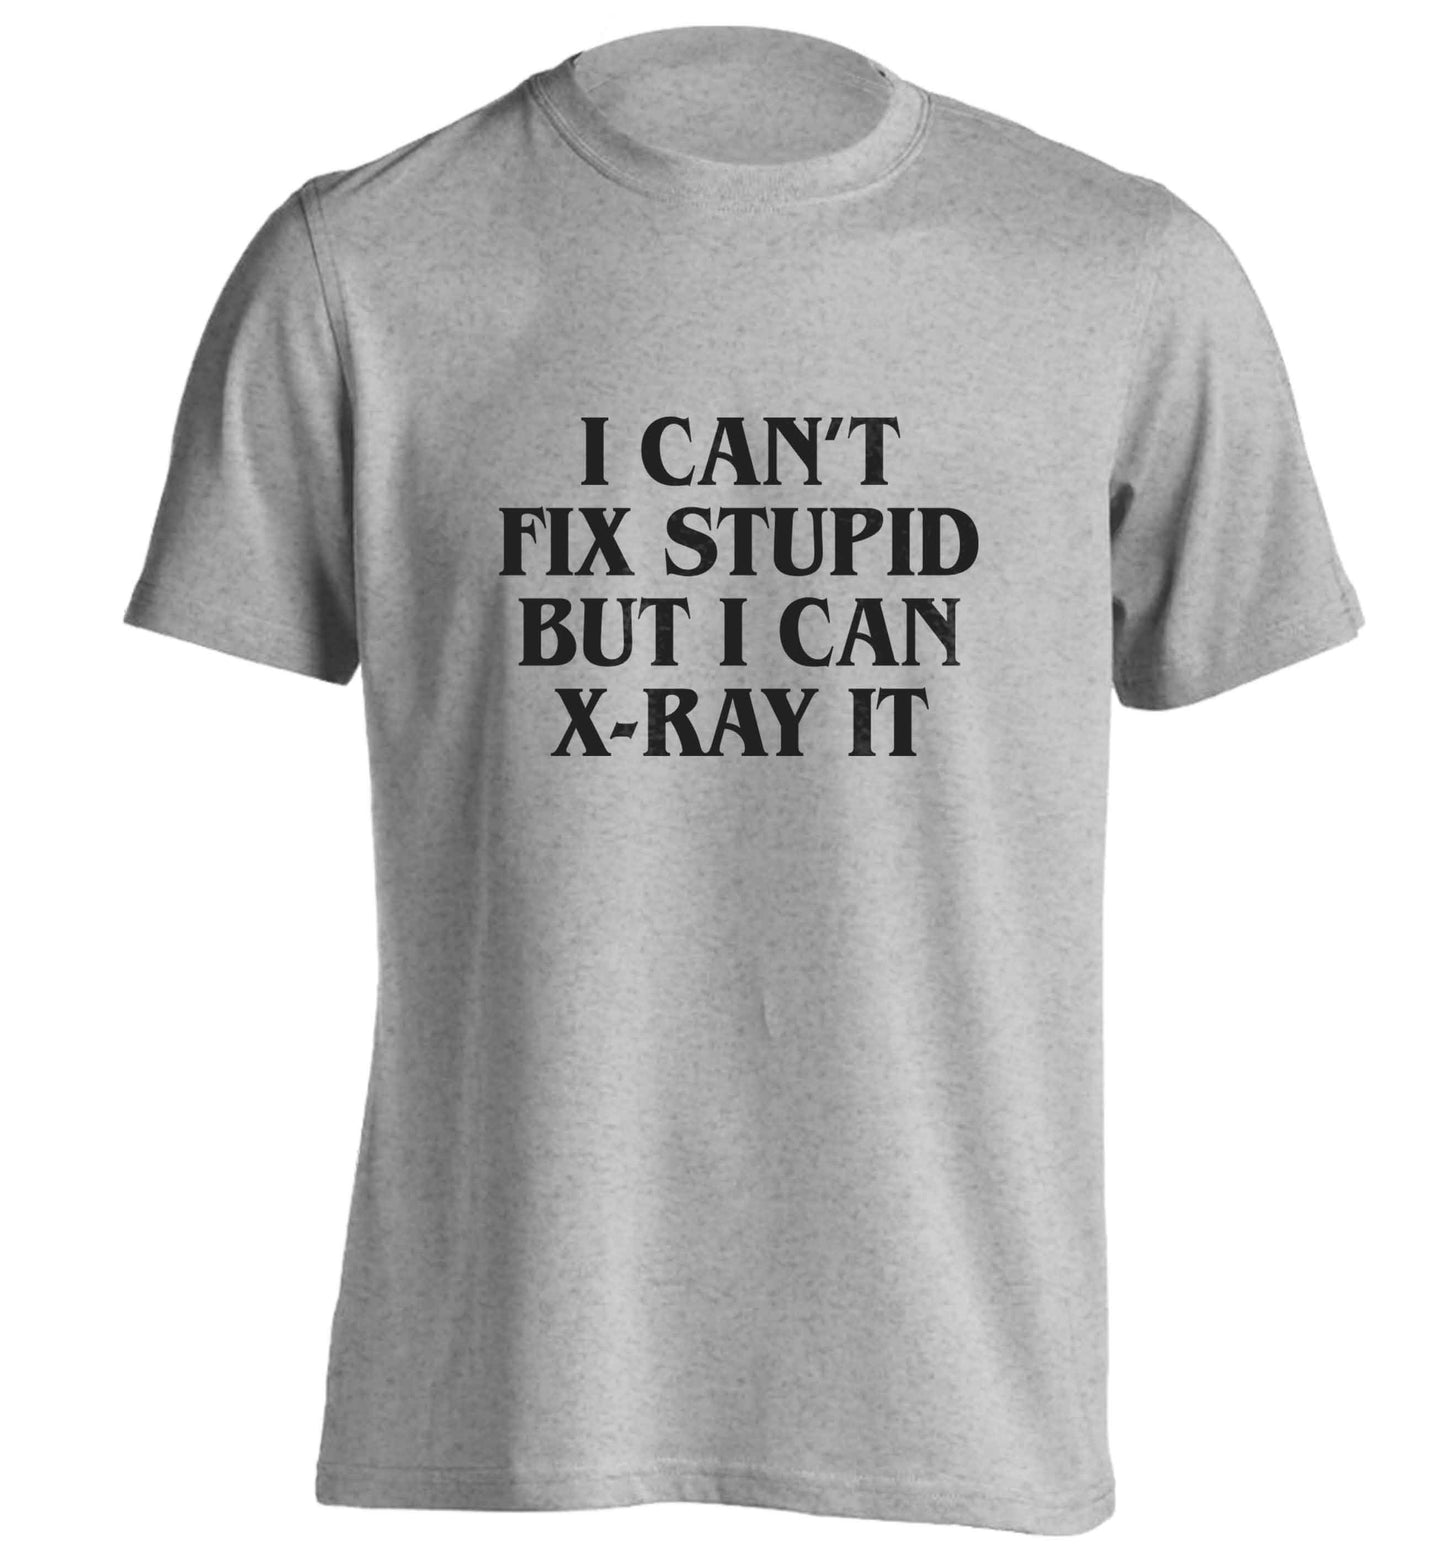 I can't fix stupid but I can X-Ray it adults unisex grey Tshirt 2XL